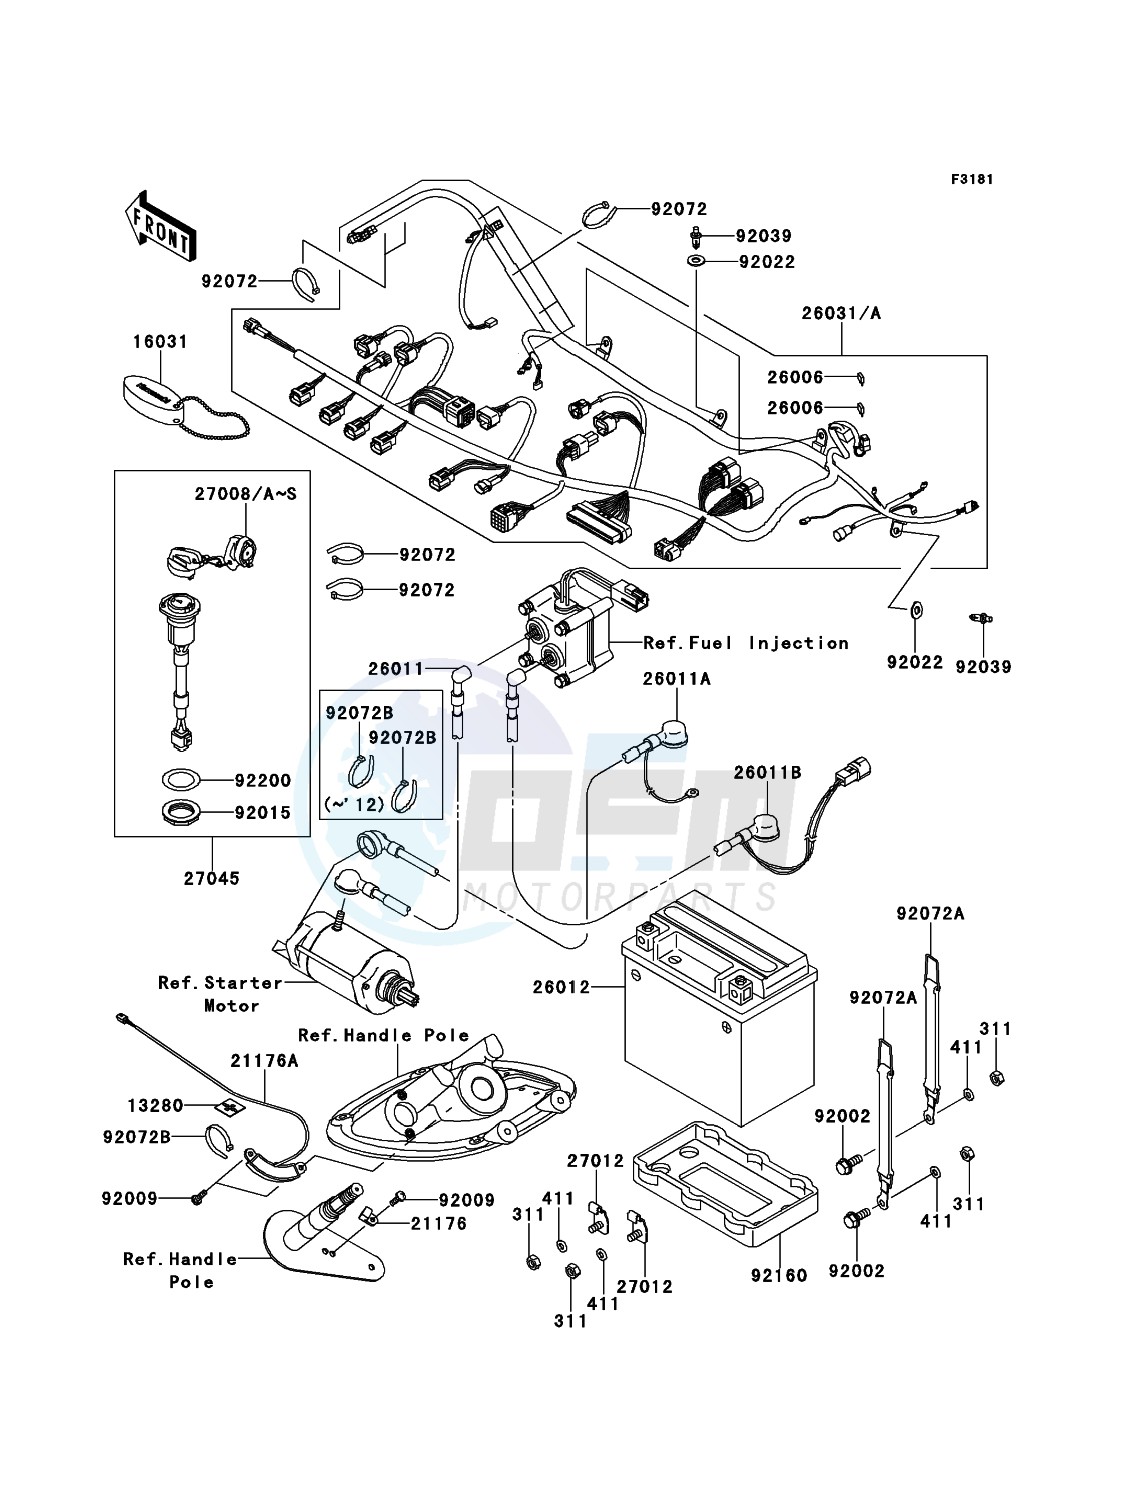 Electrical Equipment blueprint